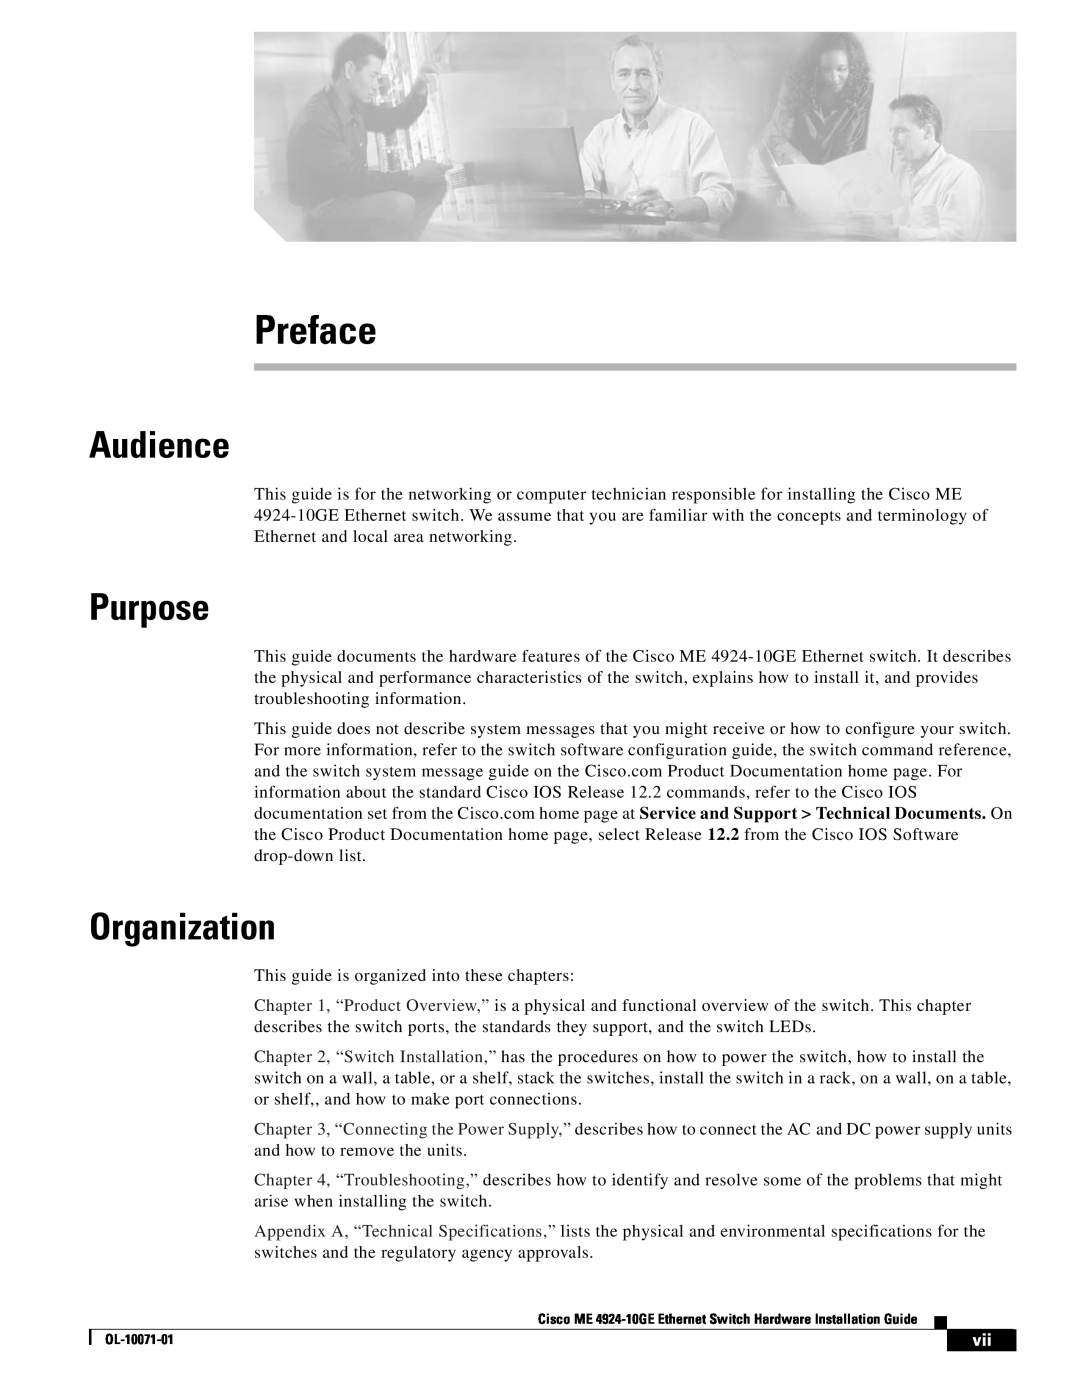 Cisco Systems ME 4924-10GE manual Preface, Audience, Purpose, Organization 